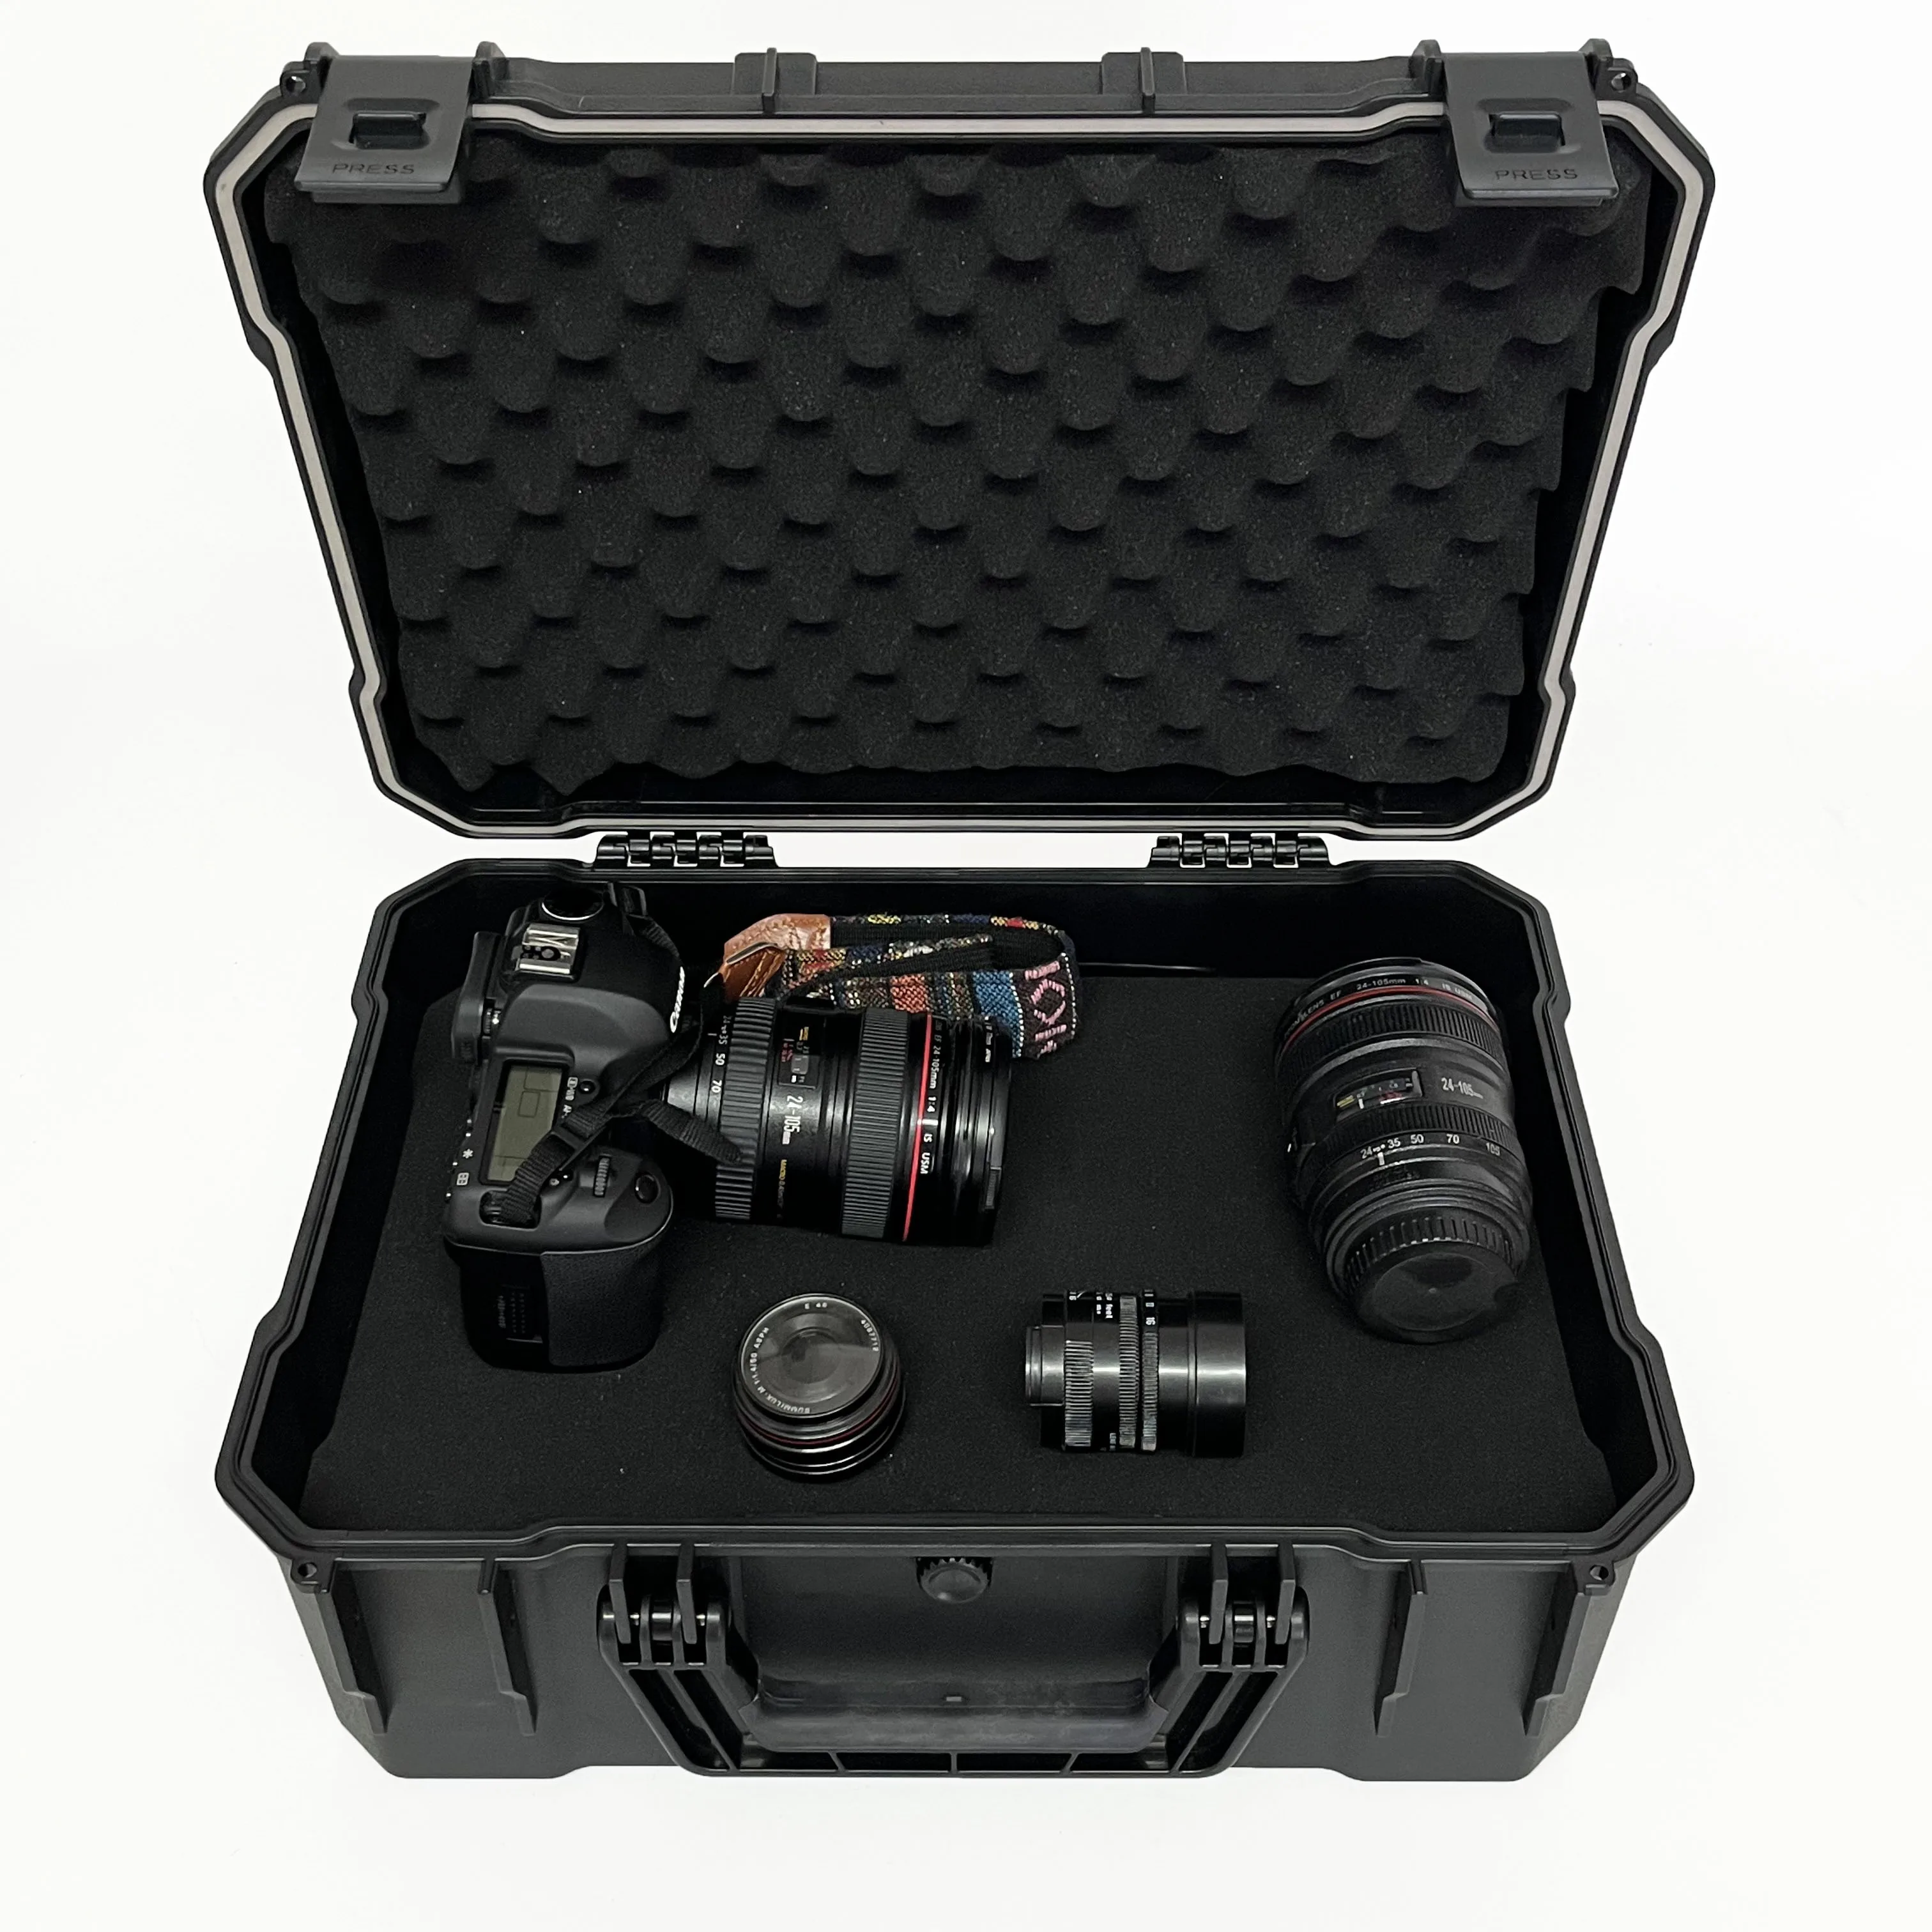 Factory Shockproof Waterproof Protective Plastic Hard Cases Field Shockproof Tactical Hard Case Video Camera Equipment